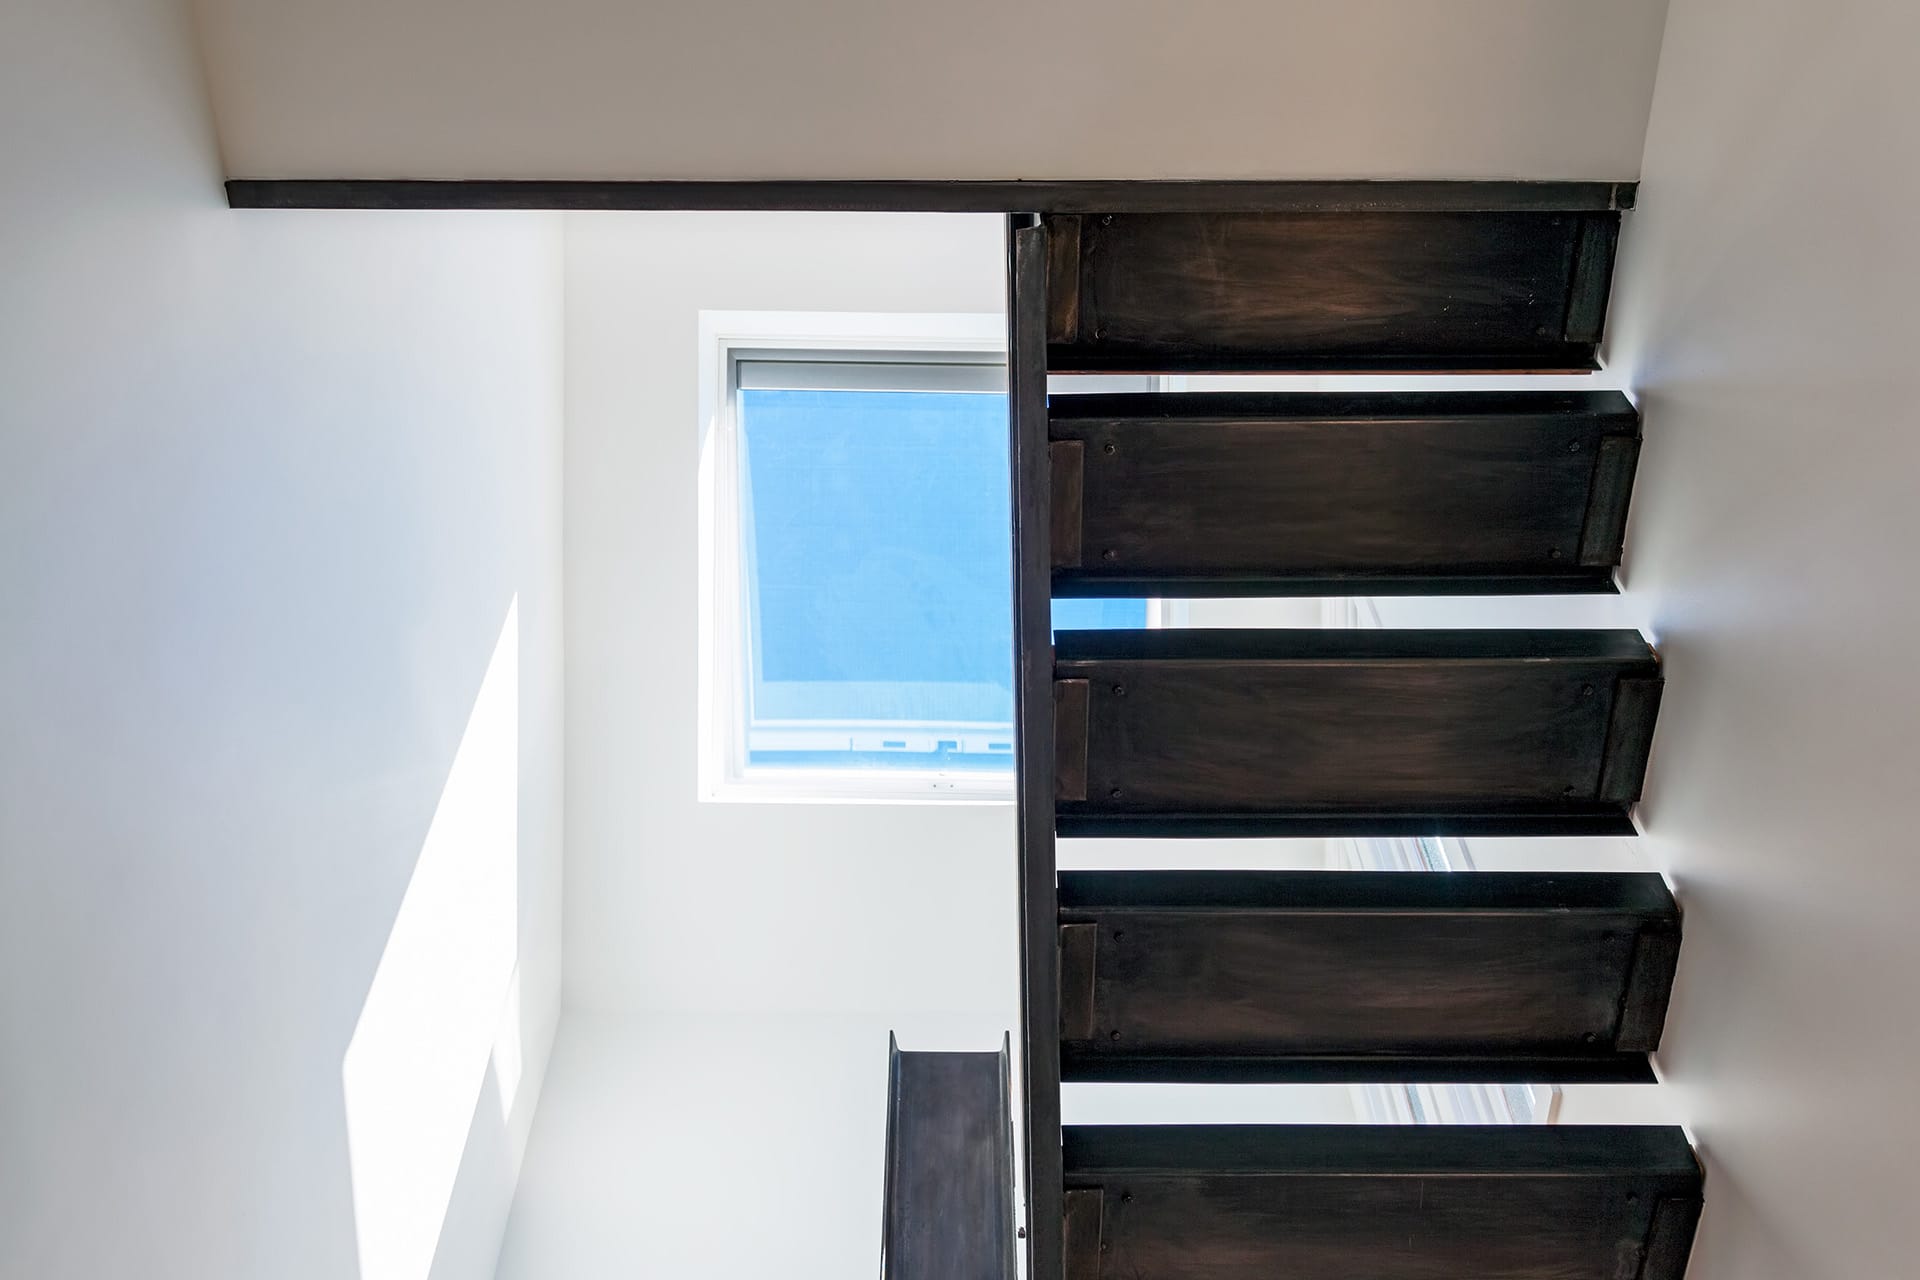 Open riser, open stringer metal staircase below a skylight